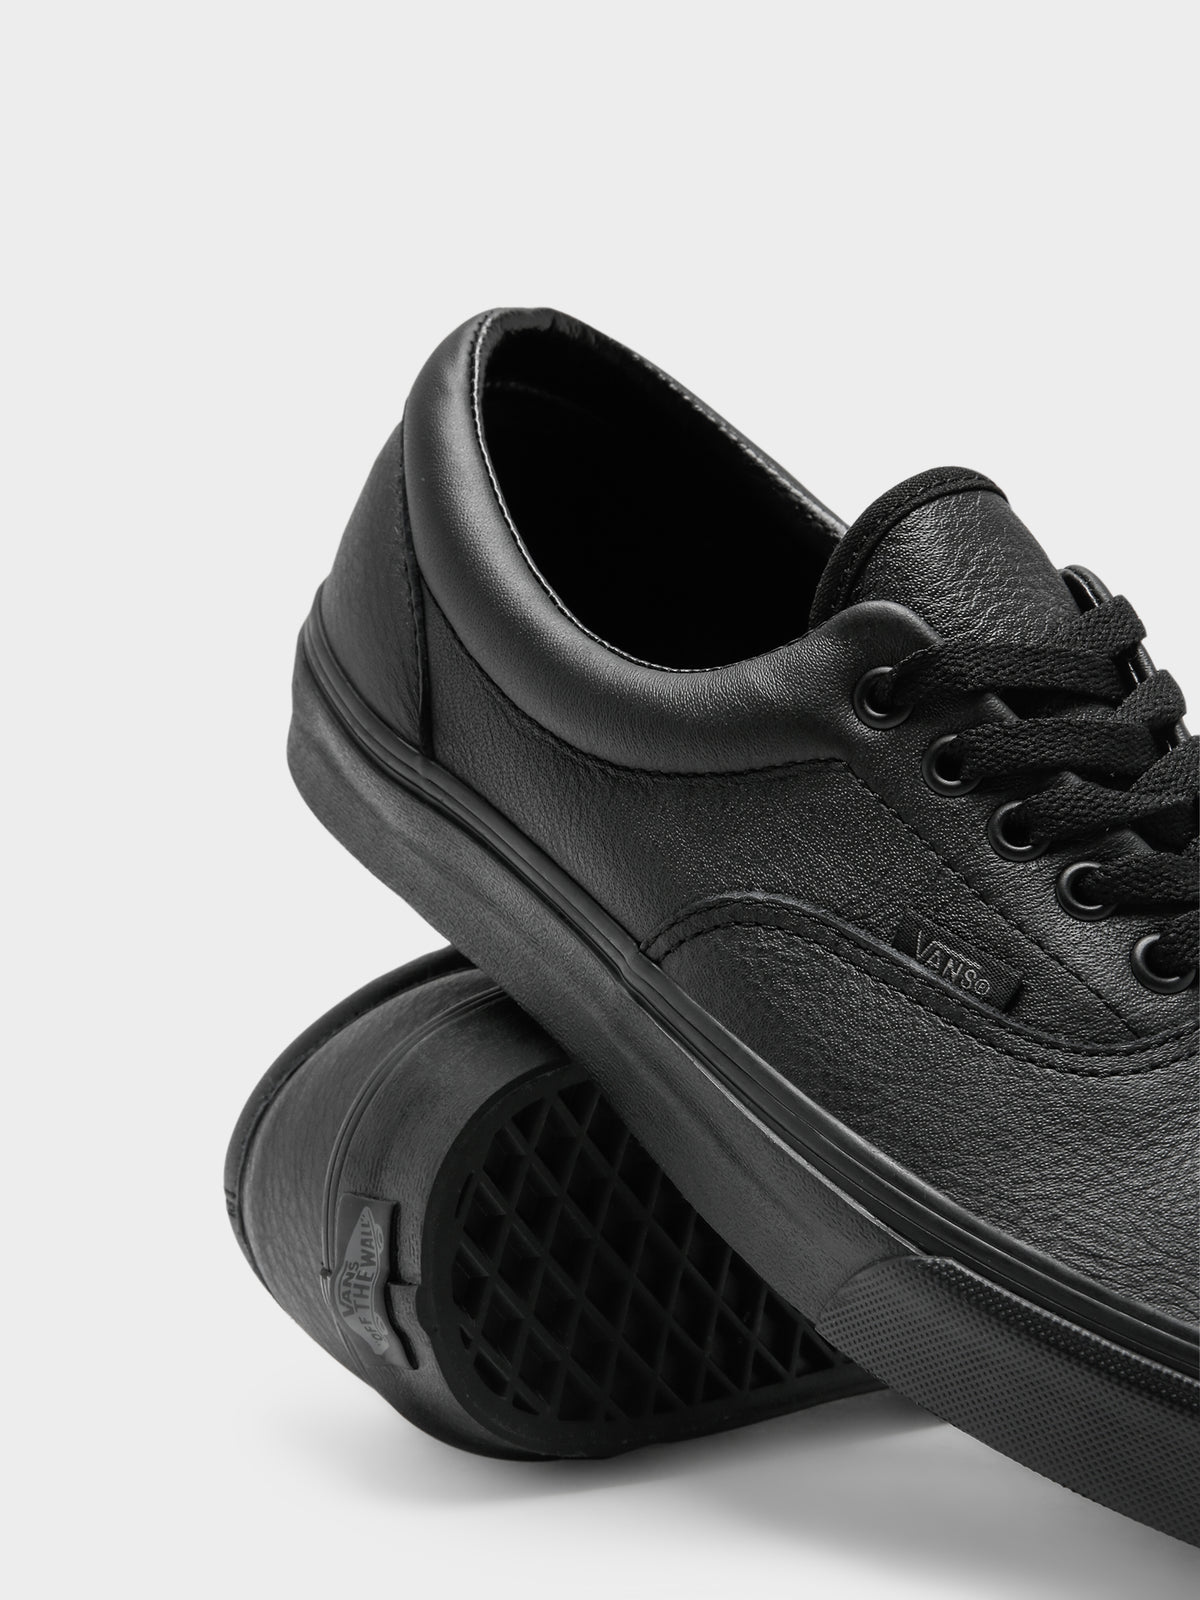 Unisex Era Leather Sneakers in Black